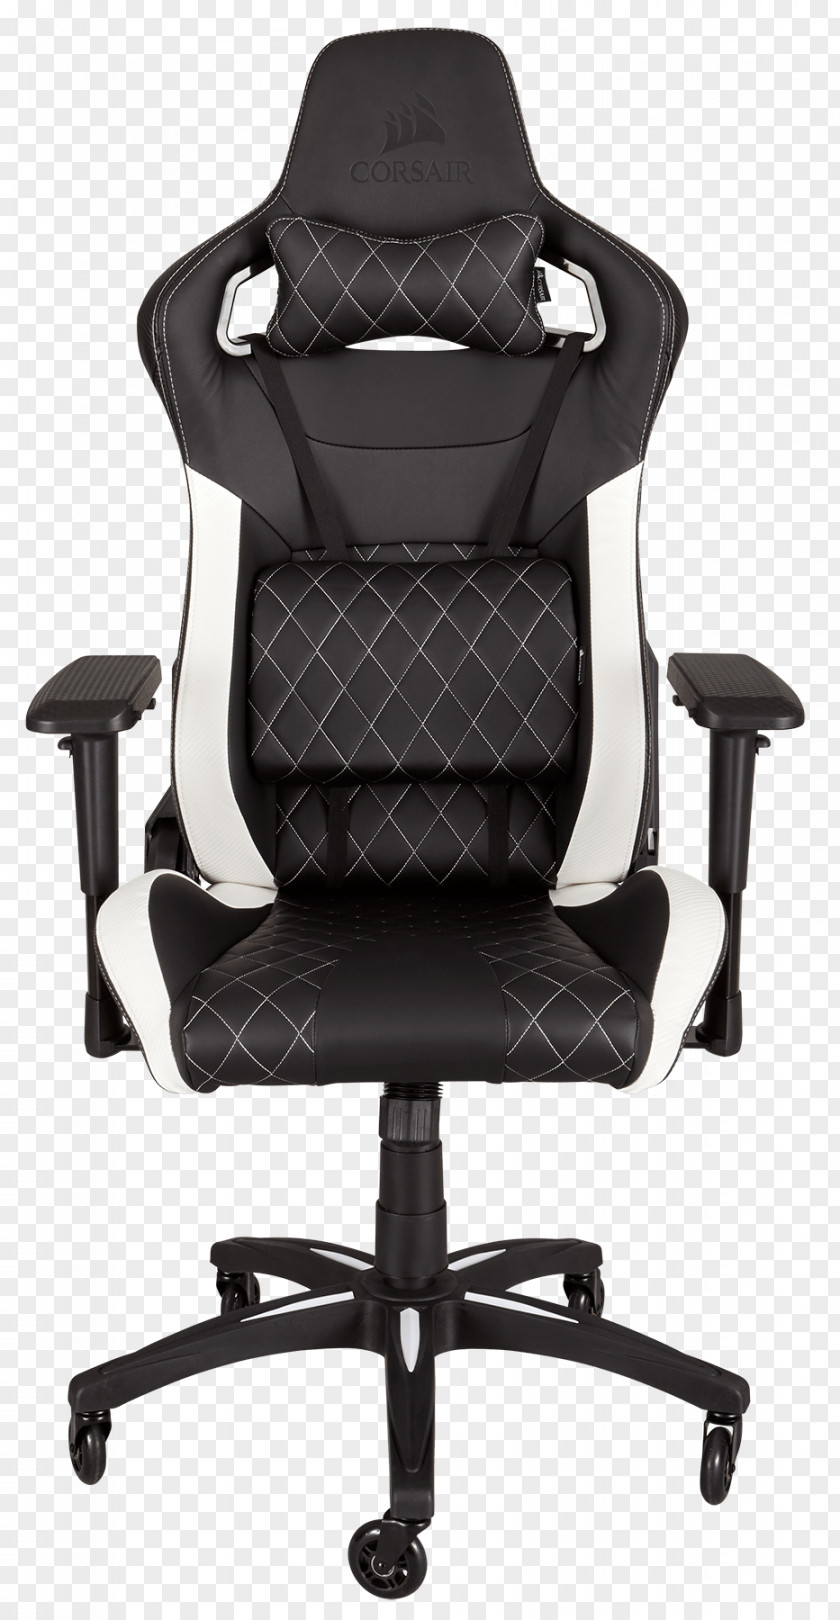 Apple Laptops Office & Desk Chairs Caster Seat Armrest PNG